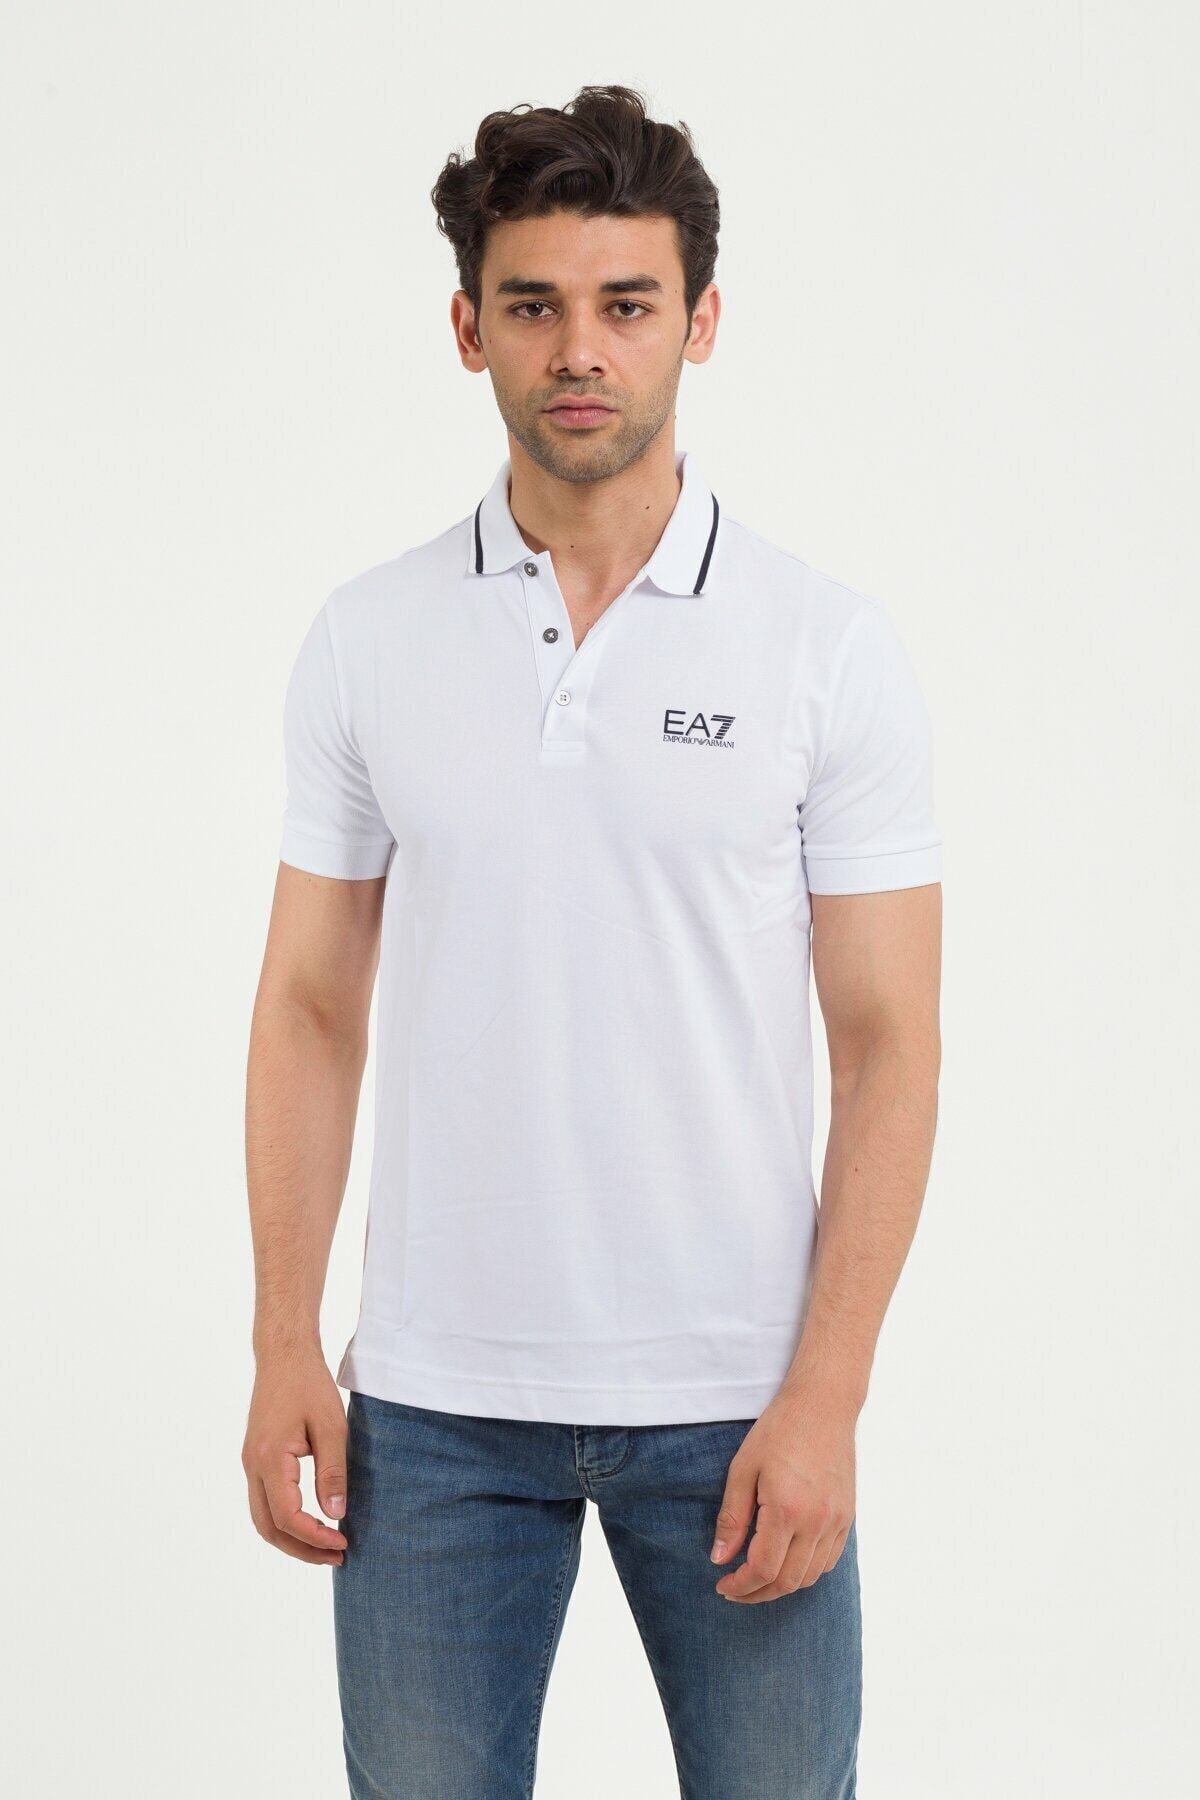 EA7 Emporio Armani Erkek Polo T-shirt